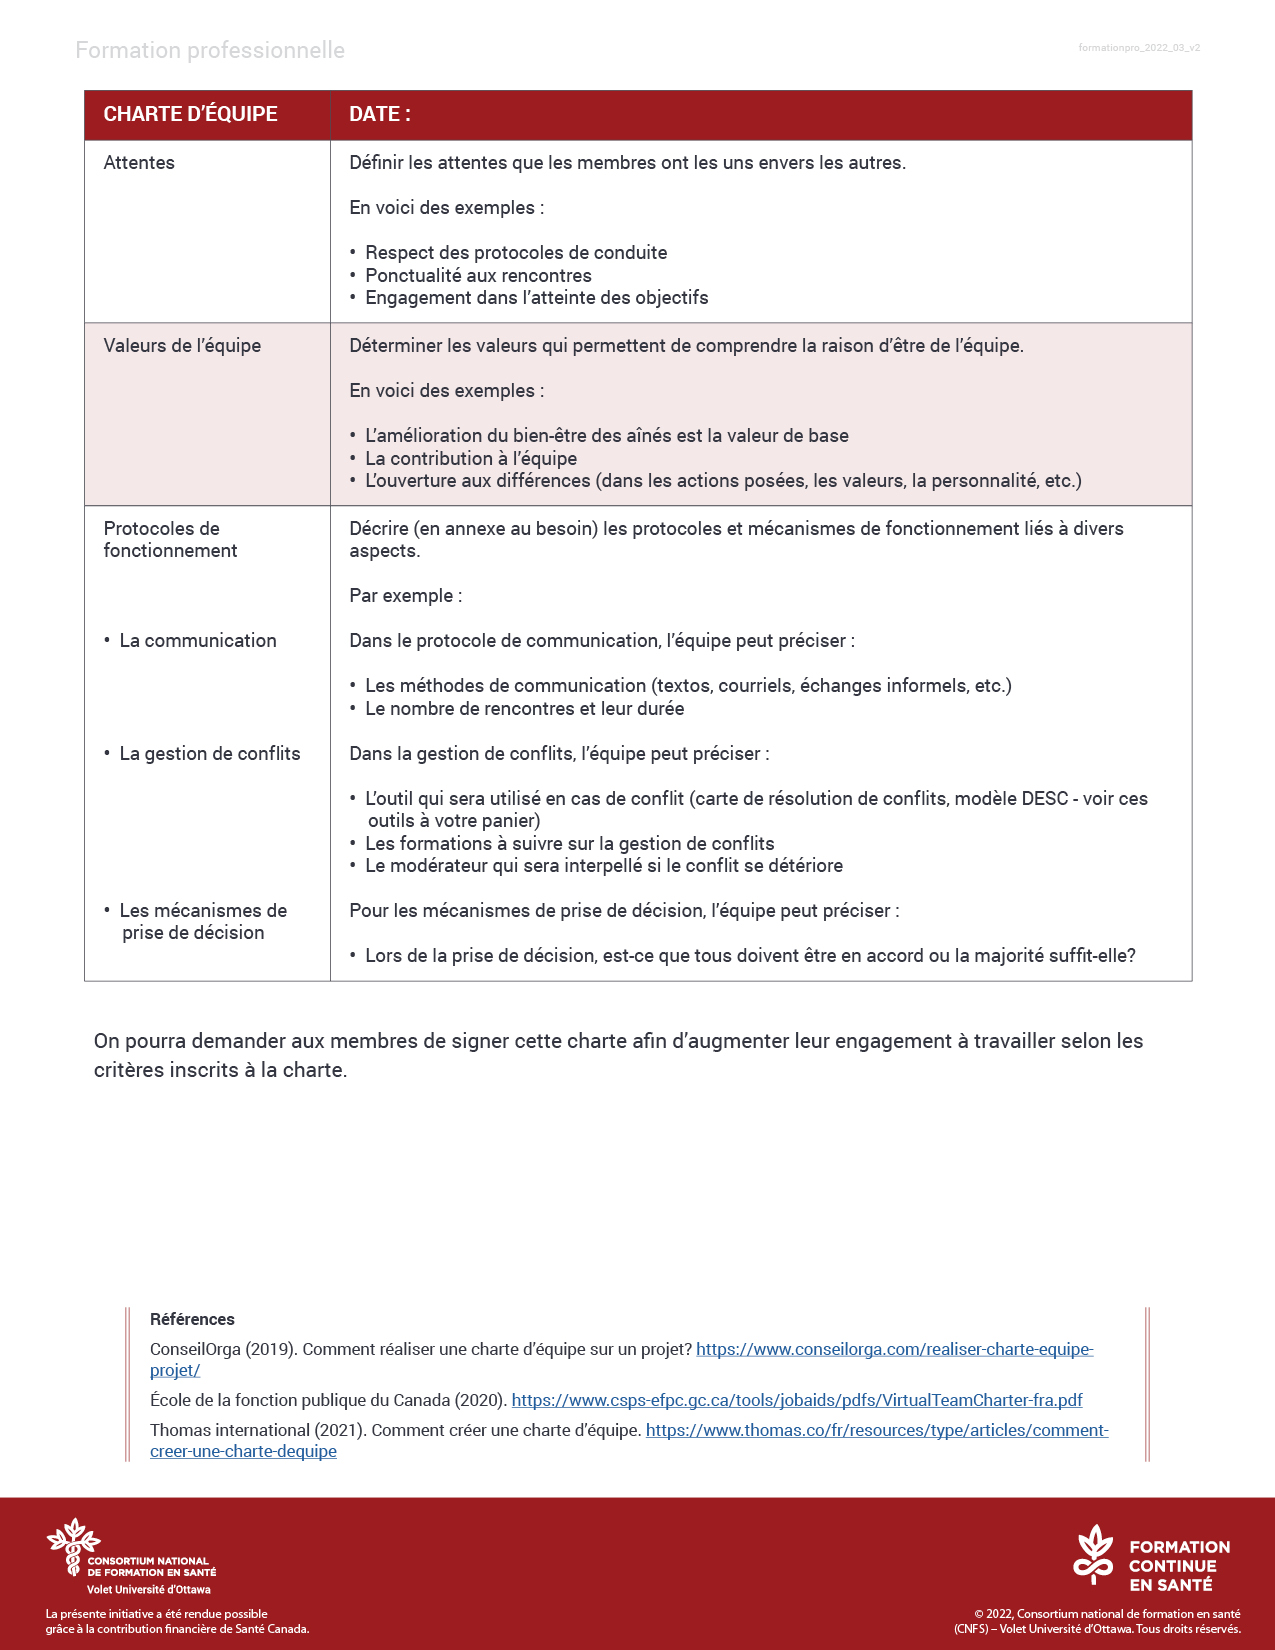 Charte_dequipe_interprofessionnelle